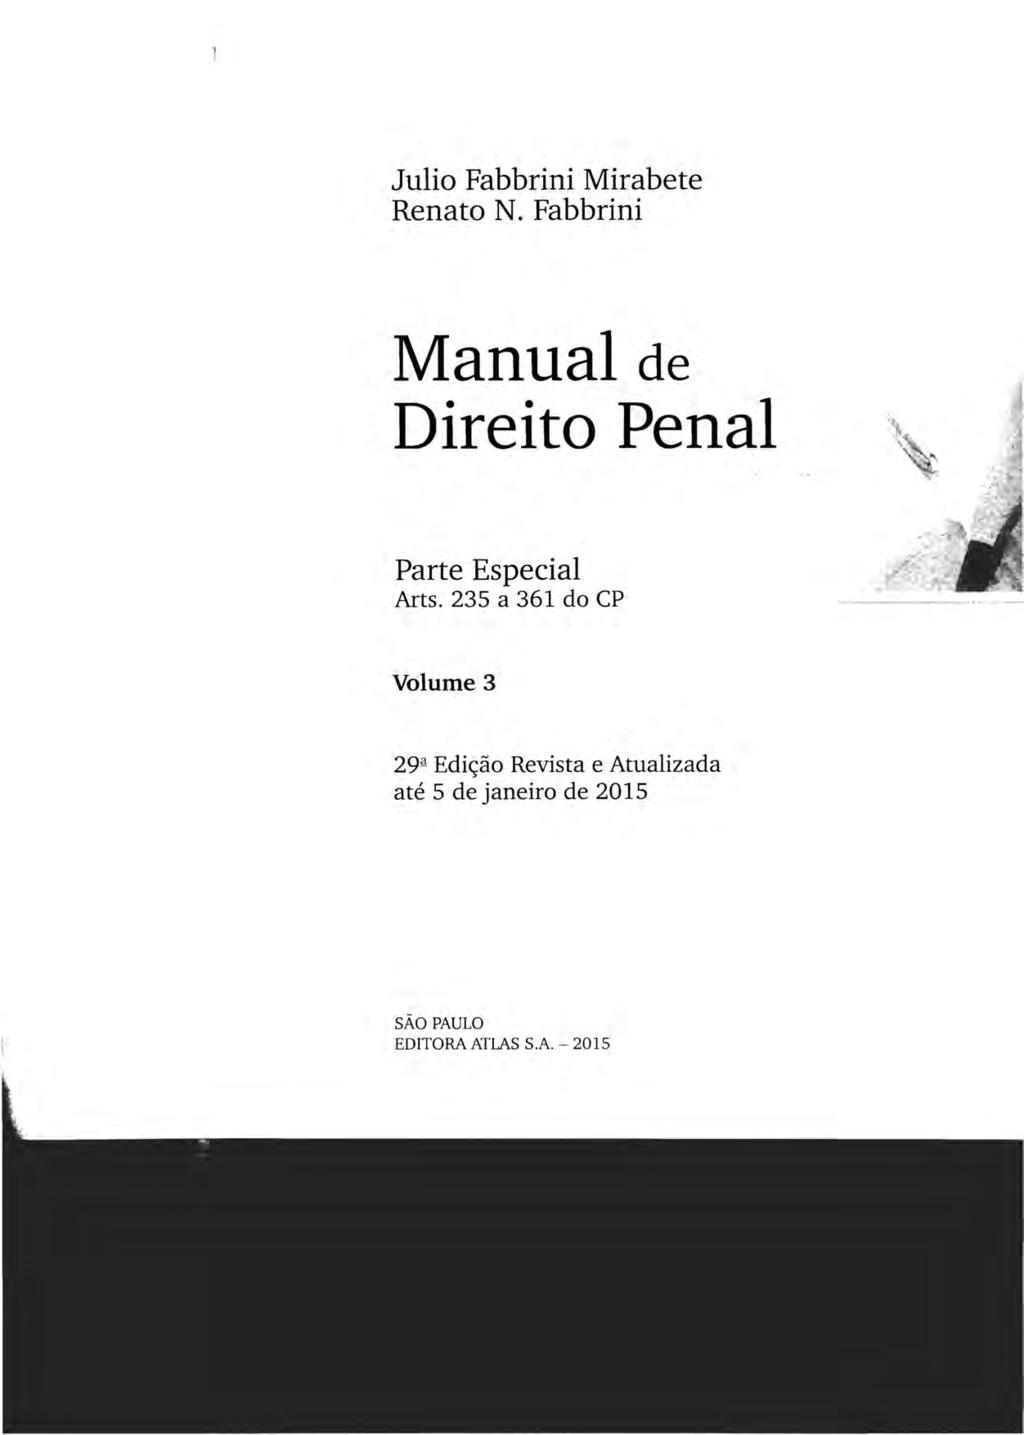 Julio Fabbrini Mirabete Renato N. Fabbrini Manual de Direito Penal Parte Especial Arts.